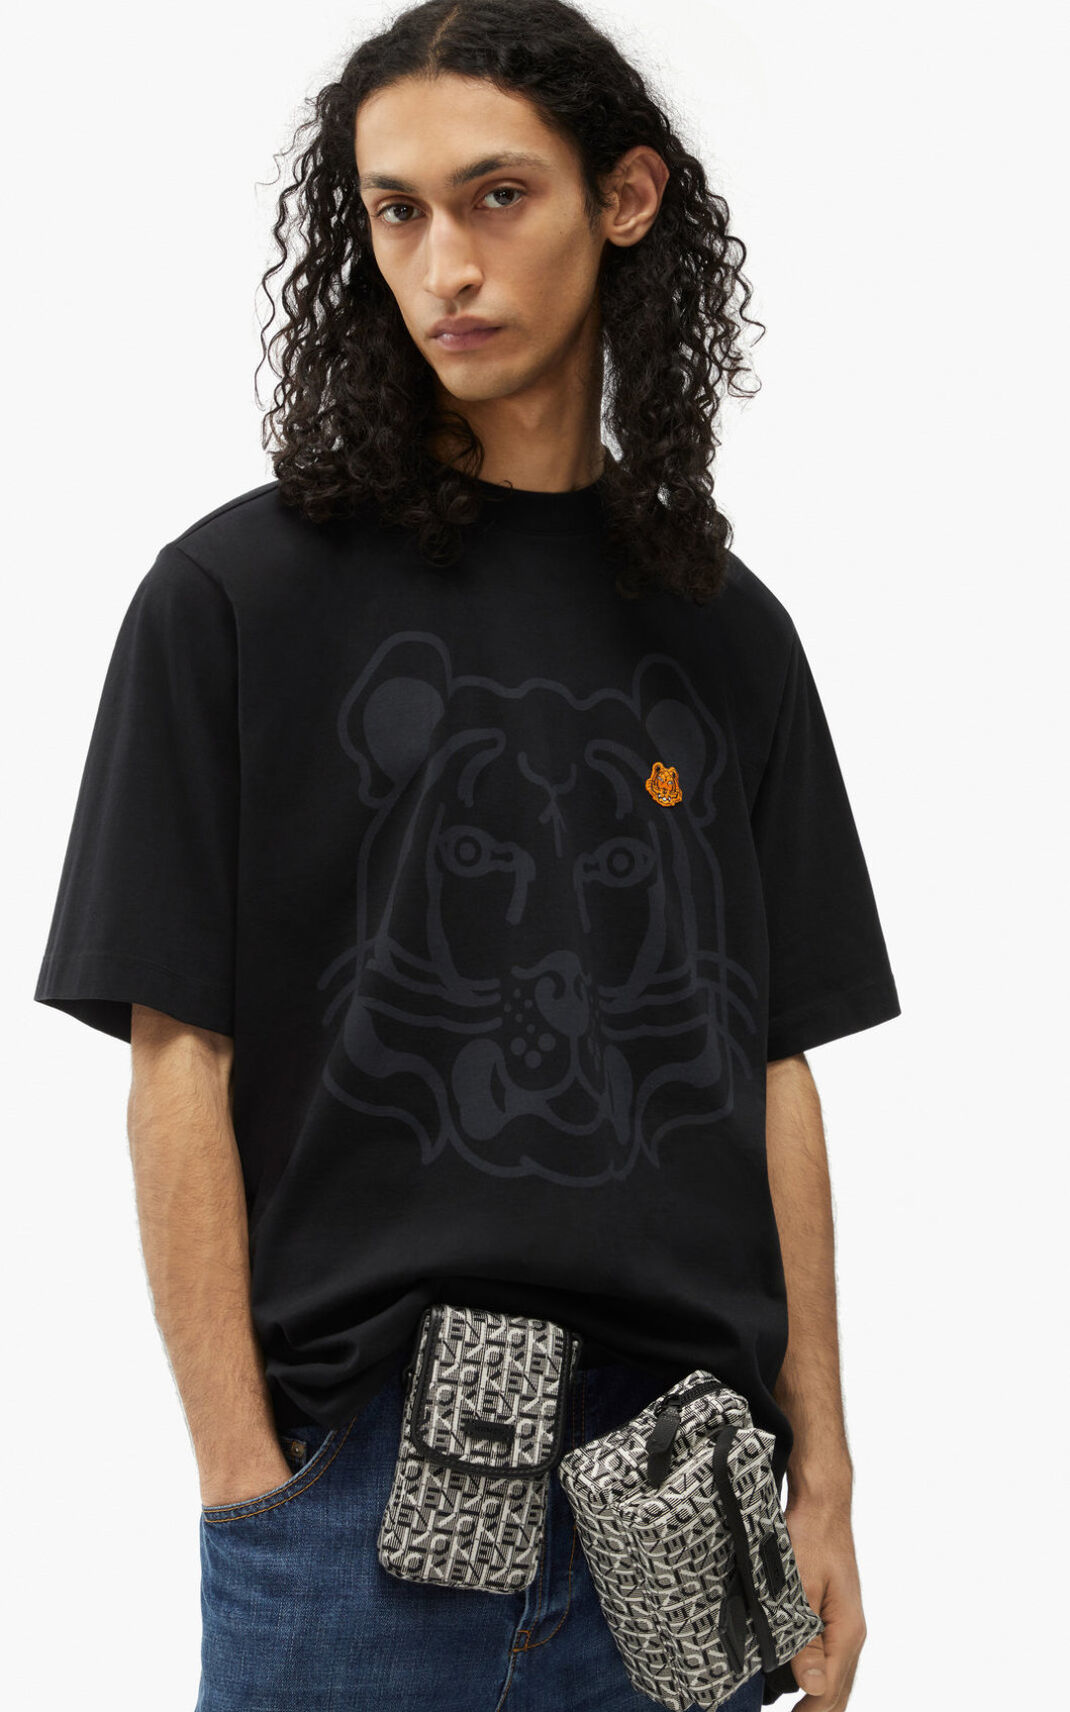 Camisetas Kenzo K Tiger oversized Hombre Negras - SKU.9792501